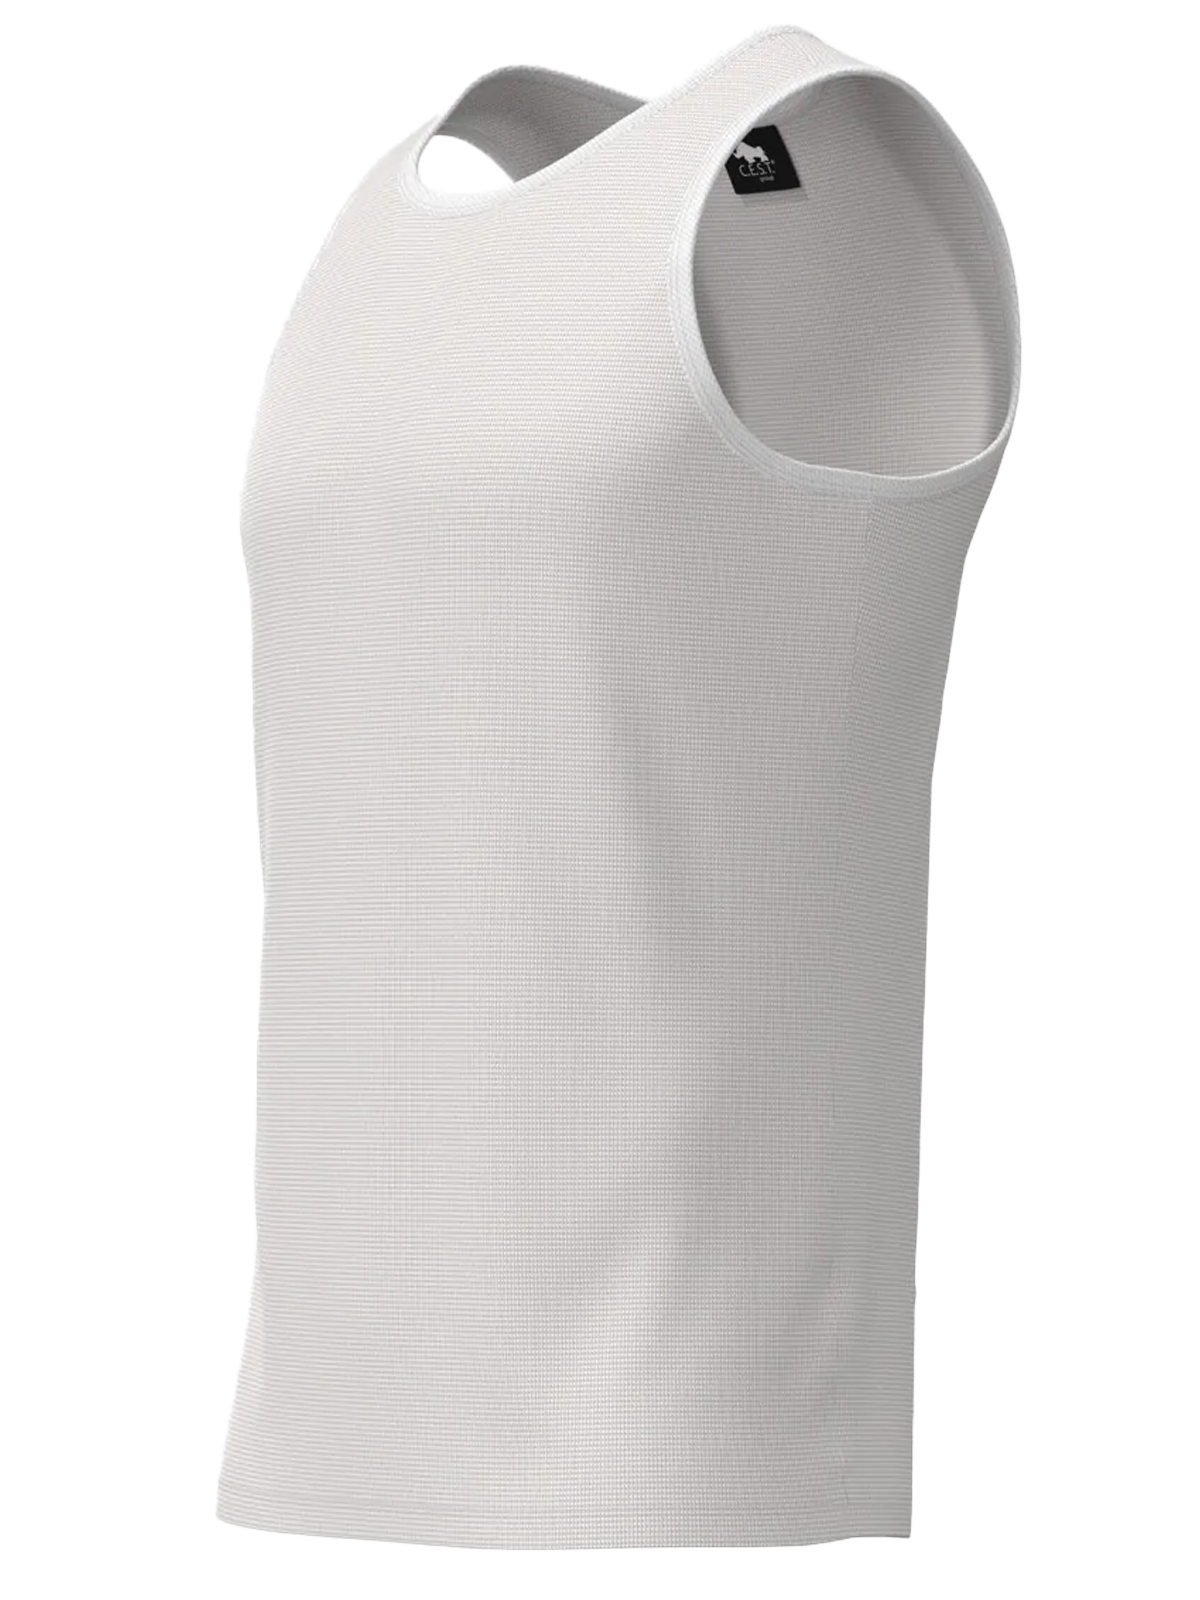 CEST® Armor Ultra Pro Shirt ballistisches Unterhemd kurz Stichschutz & –  CEST Armor